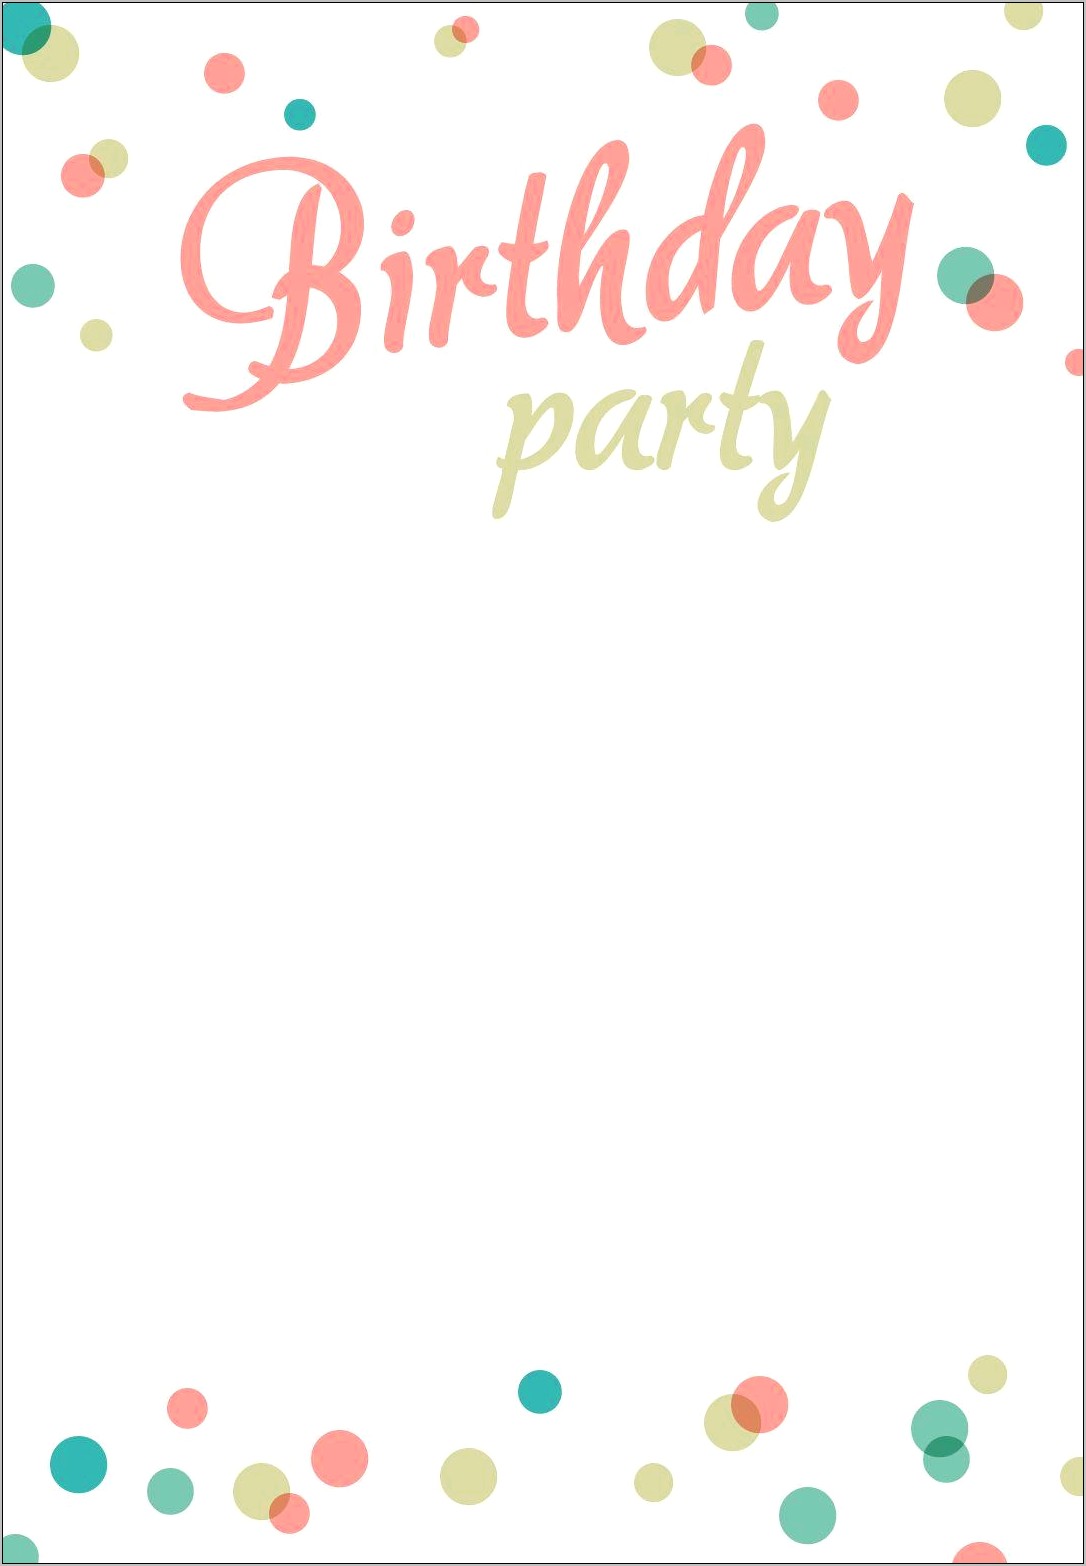 emoji-birthday-party-invitation-template-free-resume-example-gallery